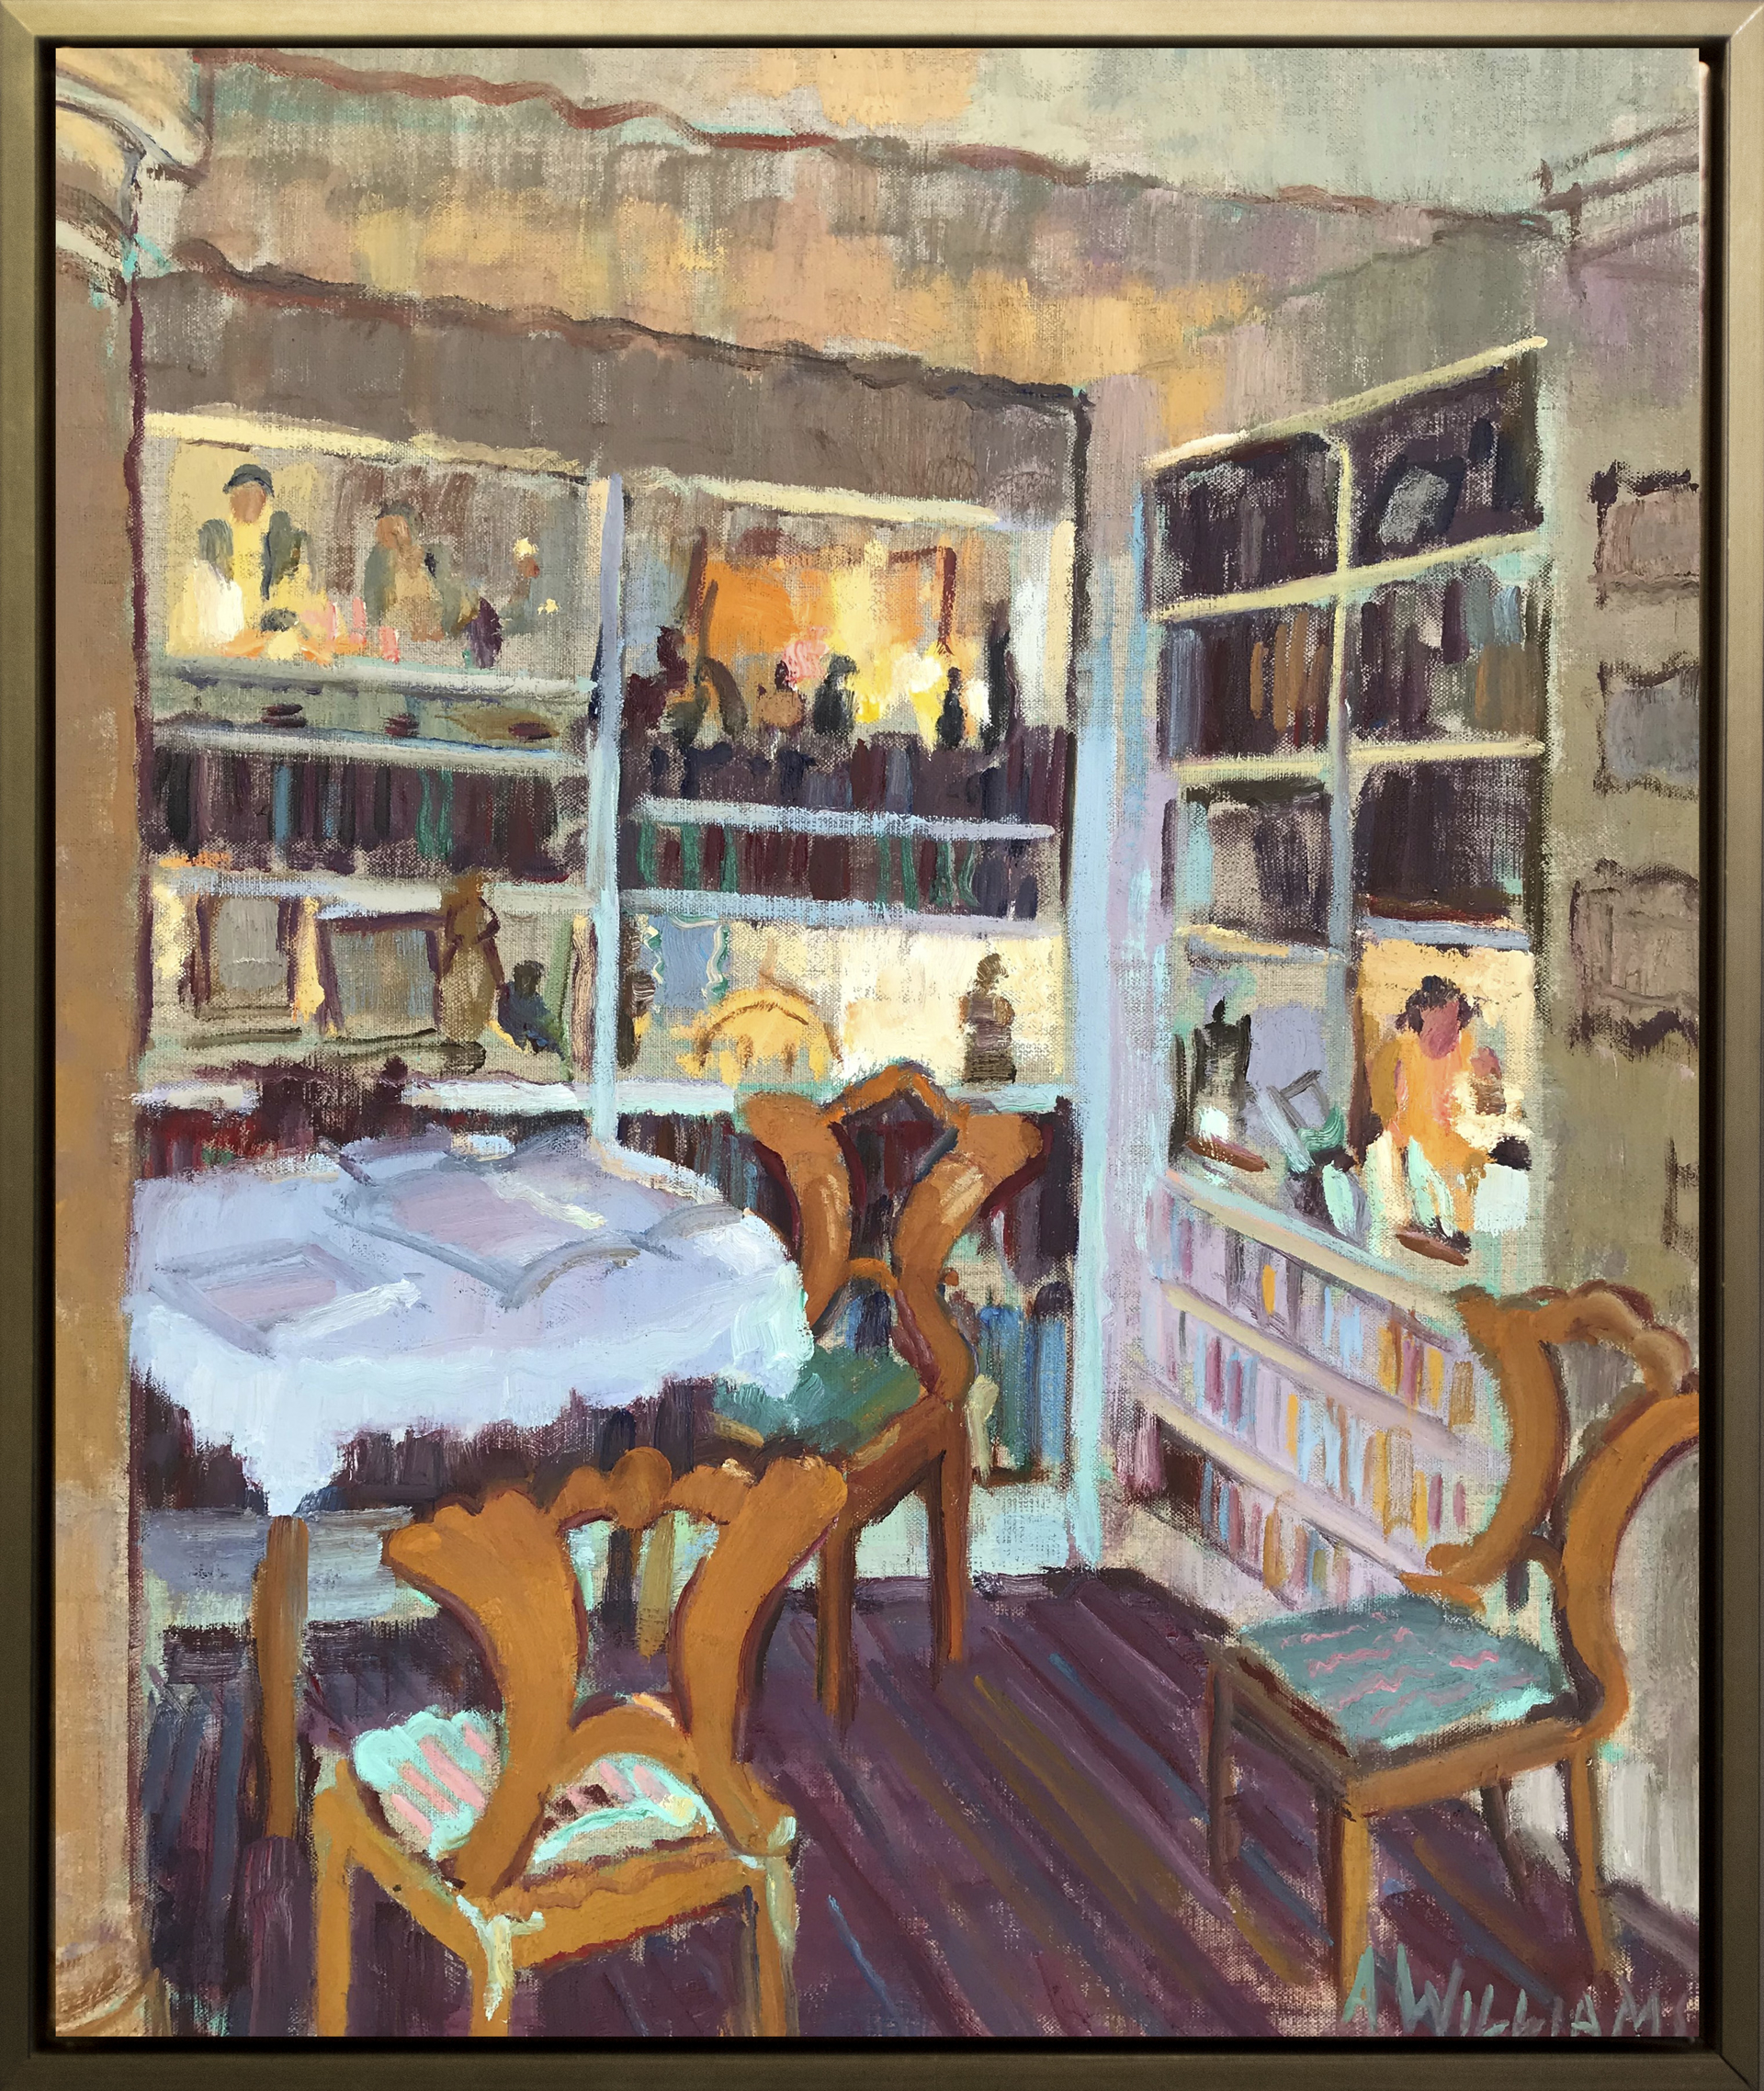 Bernadette's Reading Room by Alice Williams